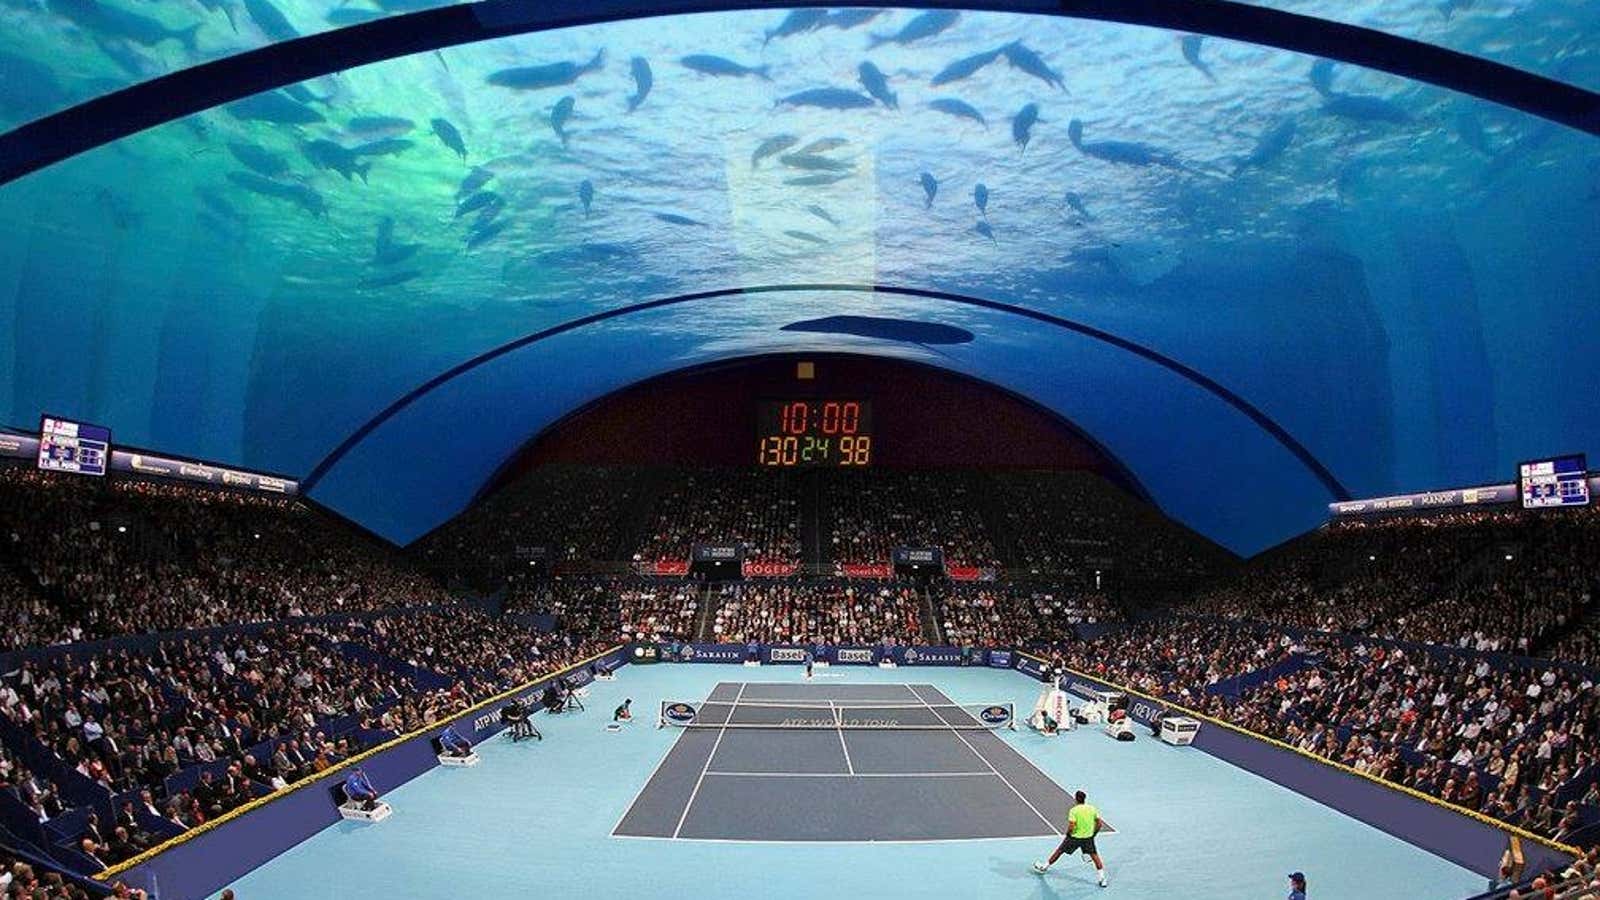 A rendering of the underwater tennis design.